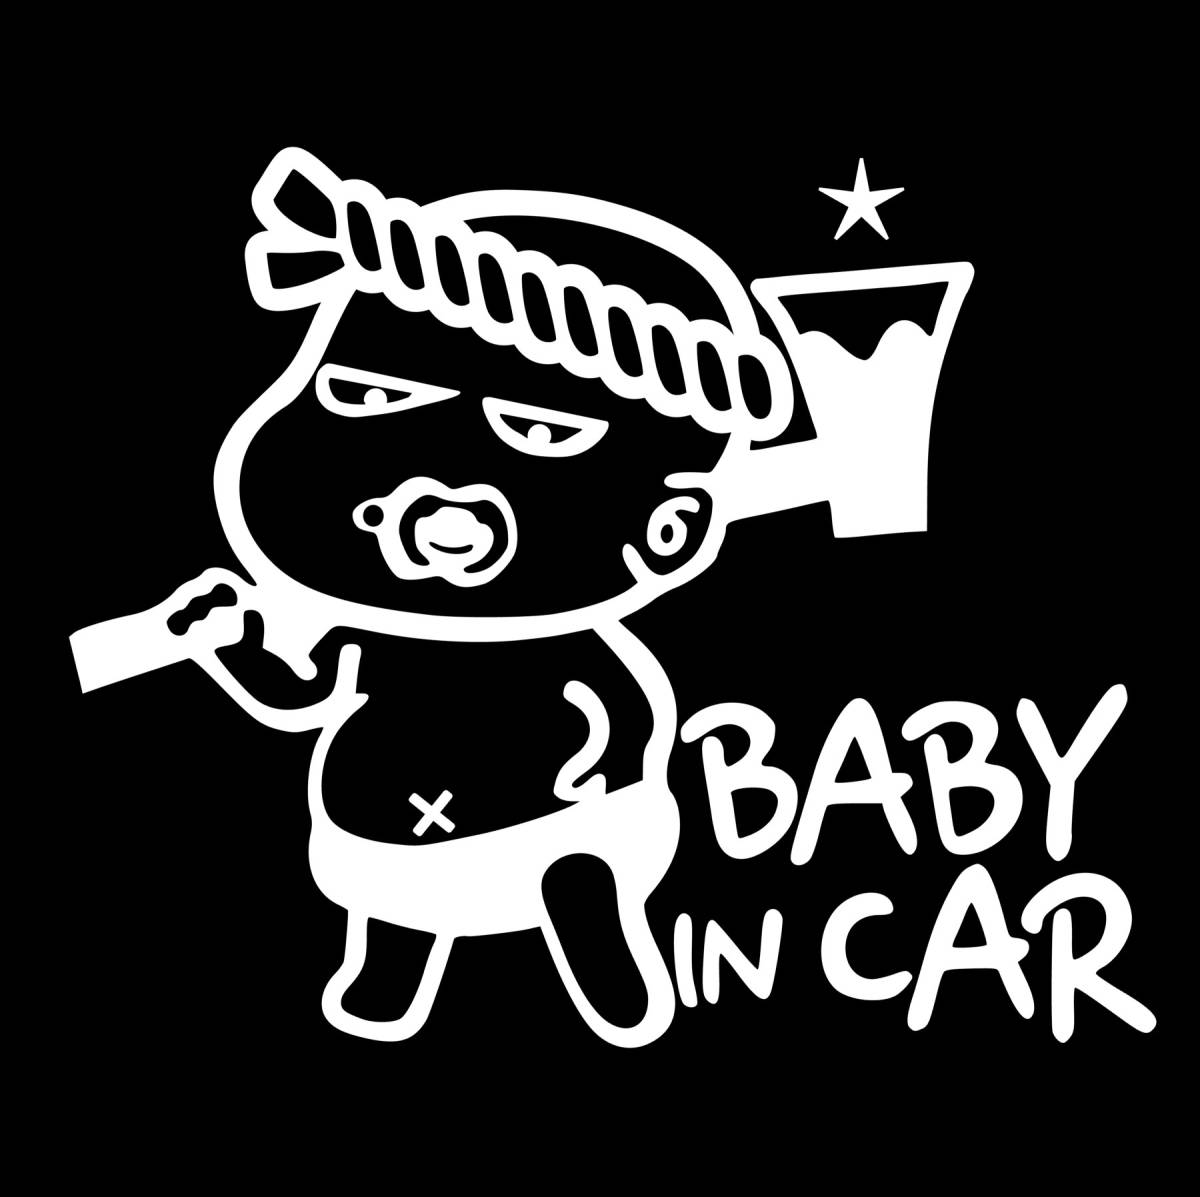  baby in машина детский in машина разрезные наклейки Baby in car